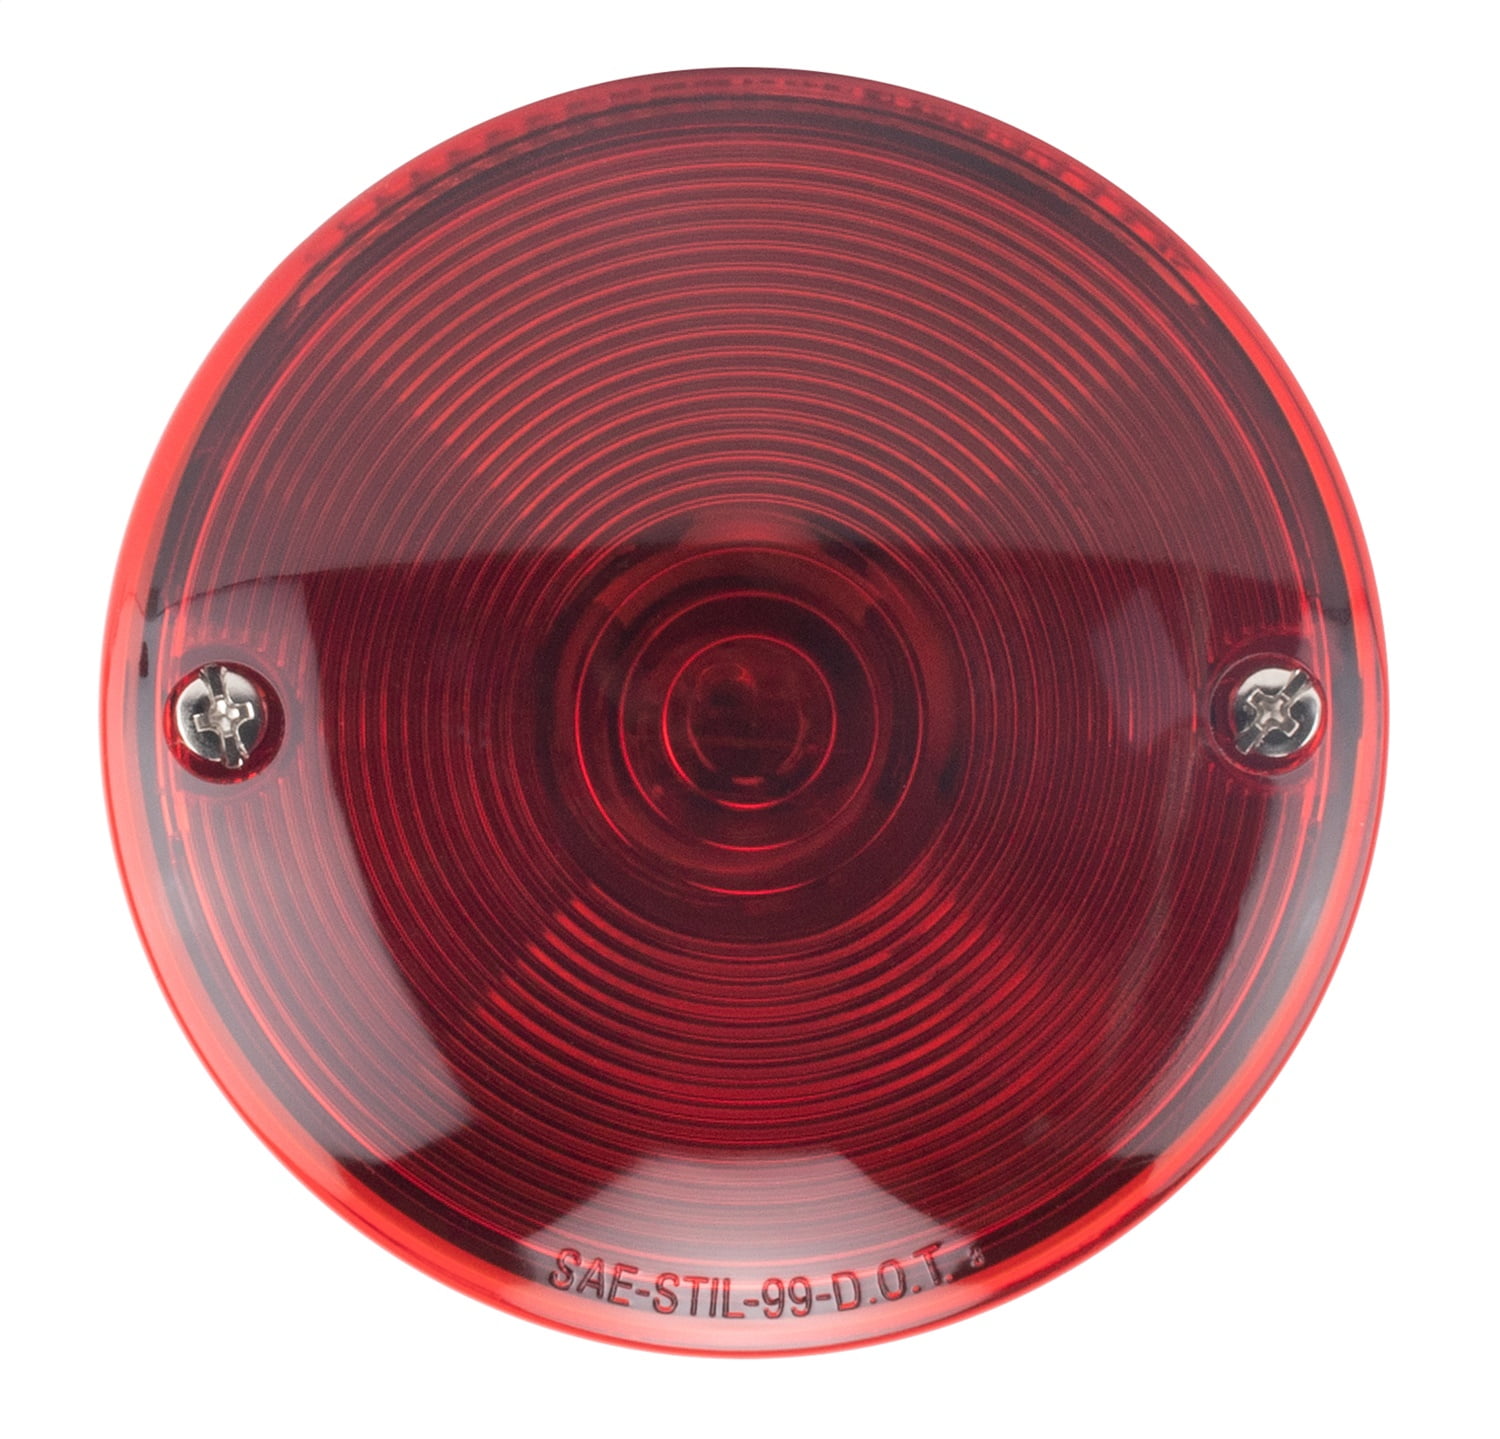 Universal Mount Trailer Round Light RV Stop Tail Turn Lamp Lighting 3-7/8" Red 